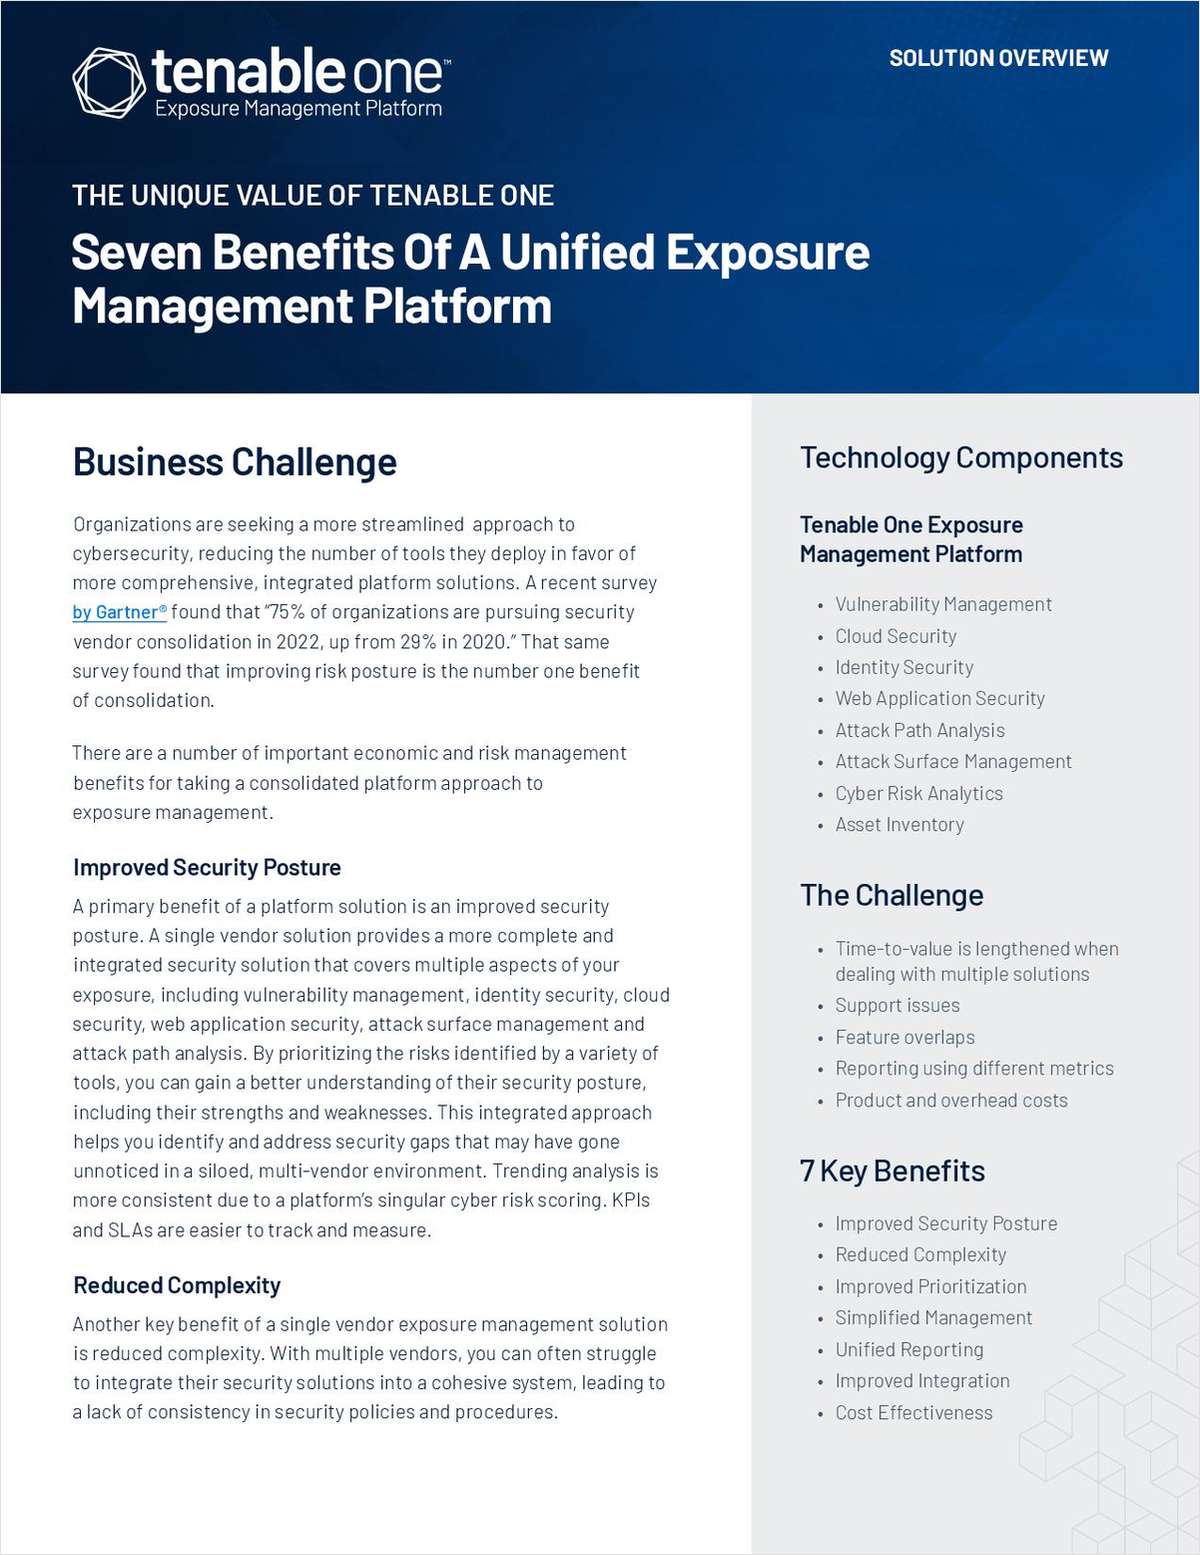 Seven Benefits Of A Unified Exposure Management Platform